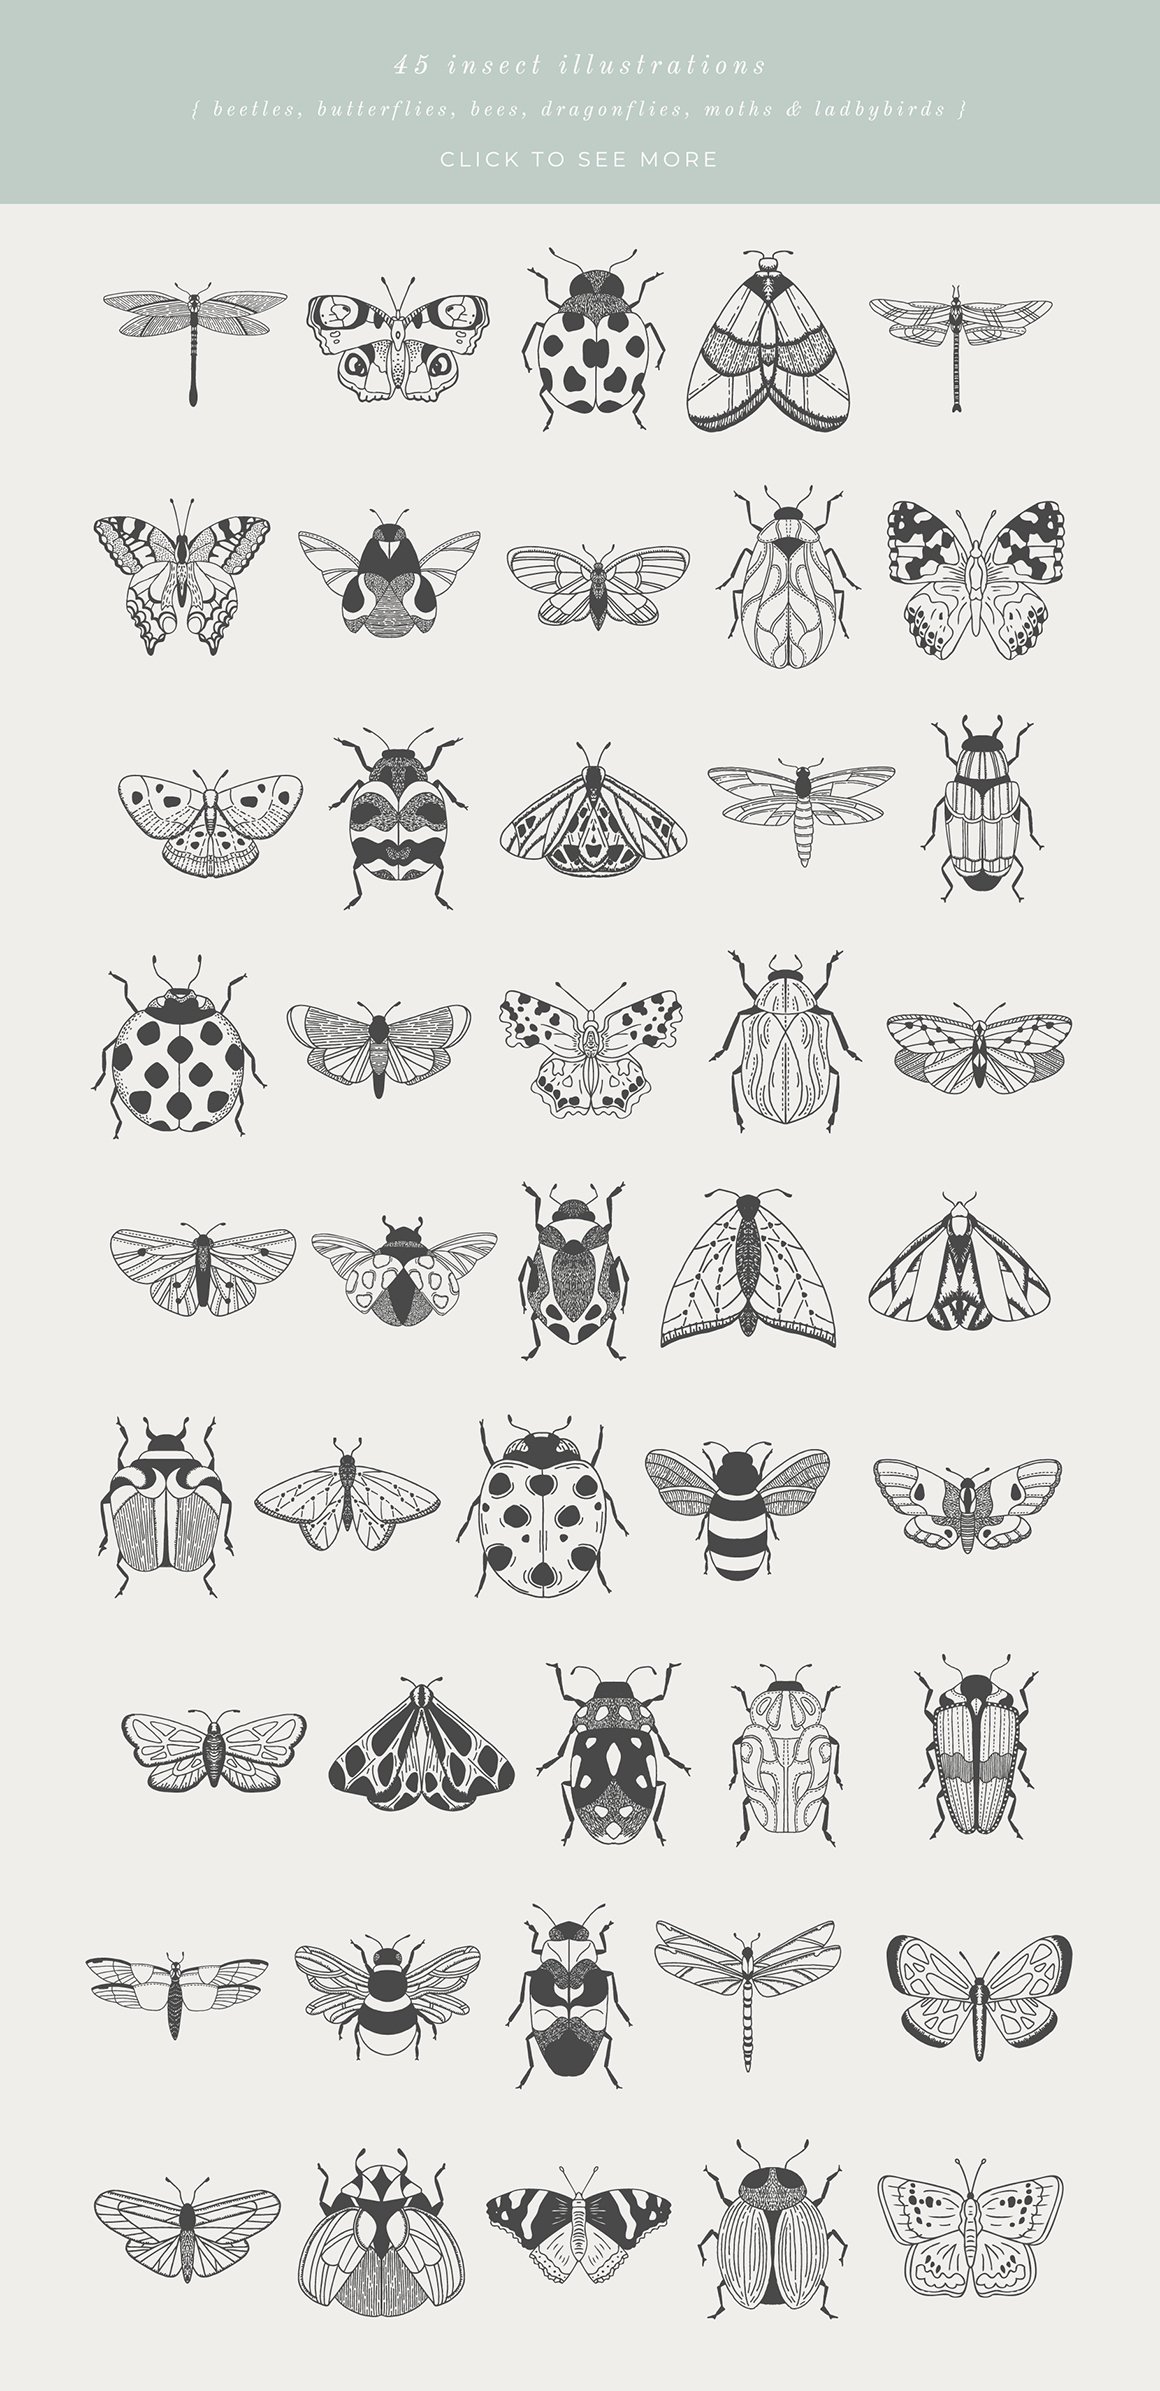 Beetles, Bugs & Butterflies Vector Illustrations